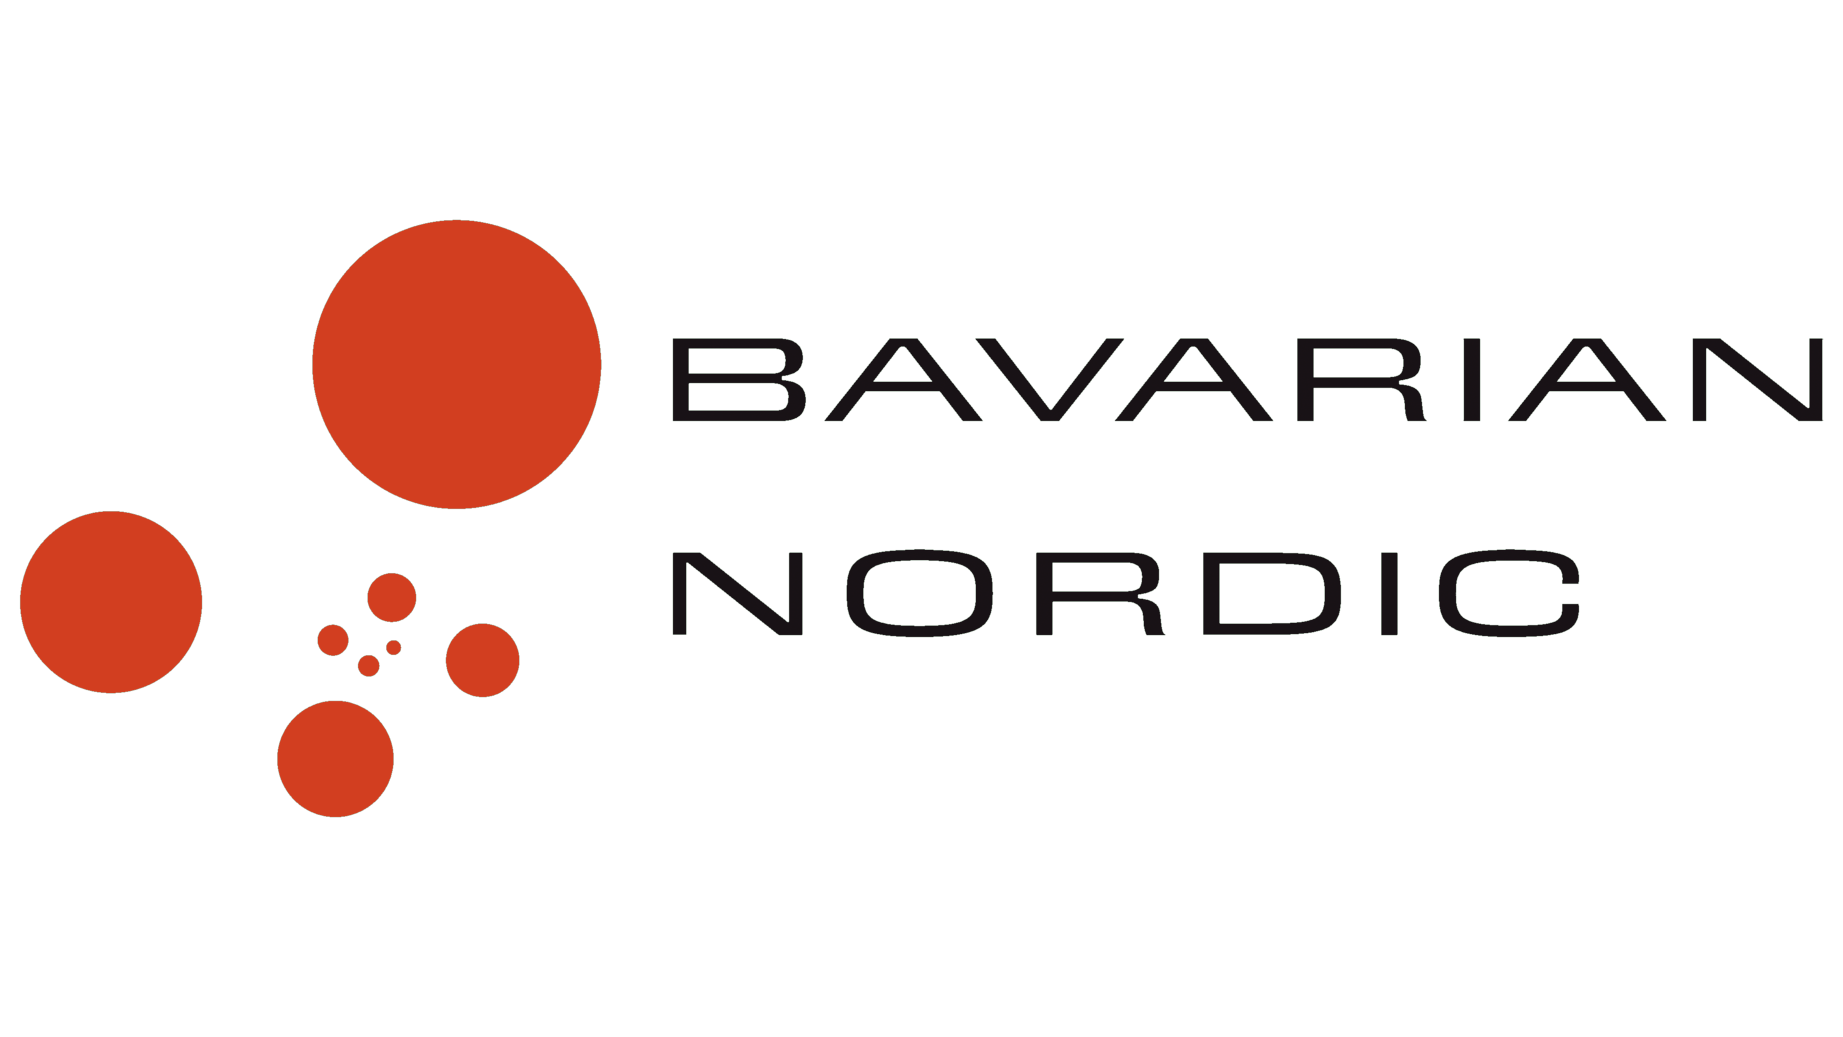 Bavarian nordic sign